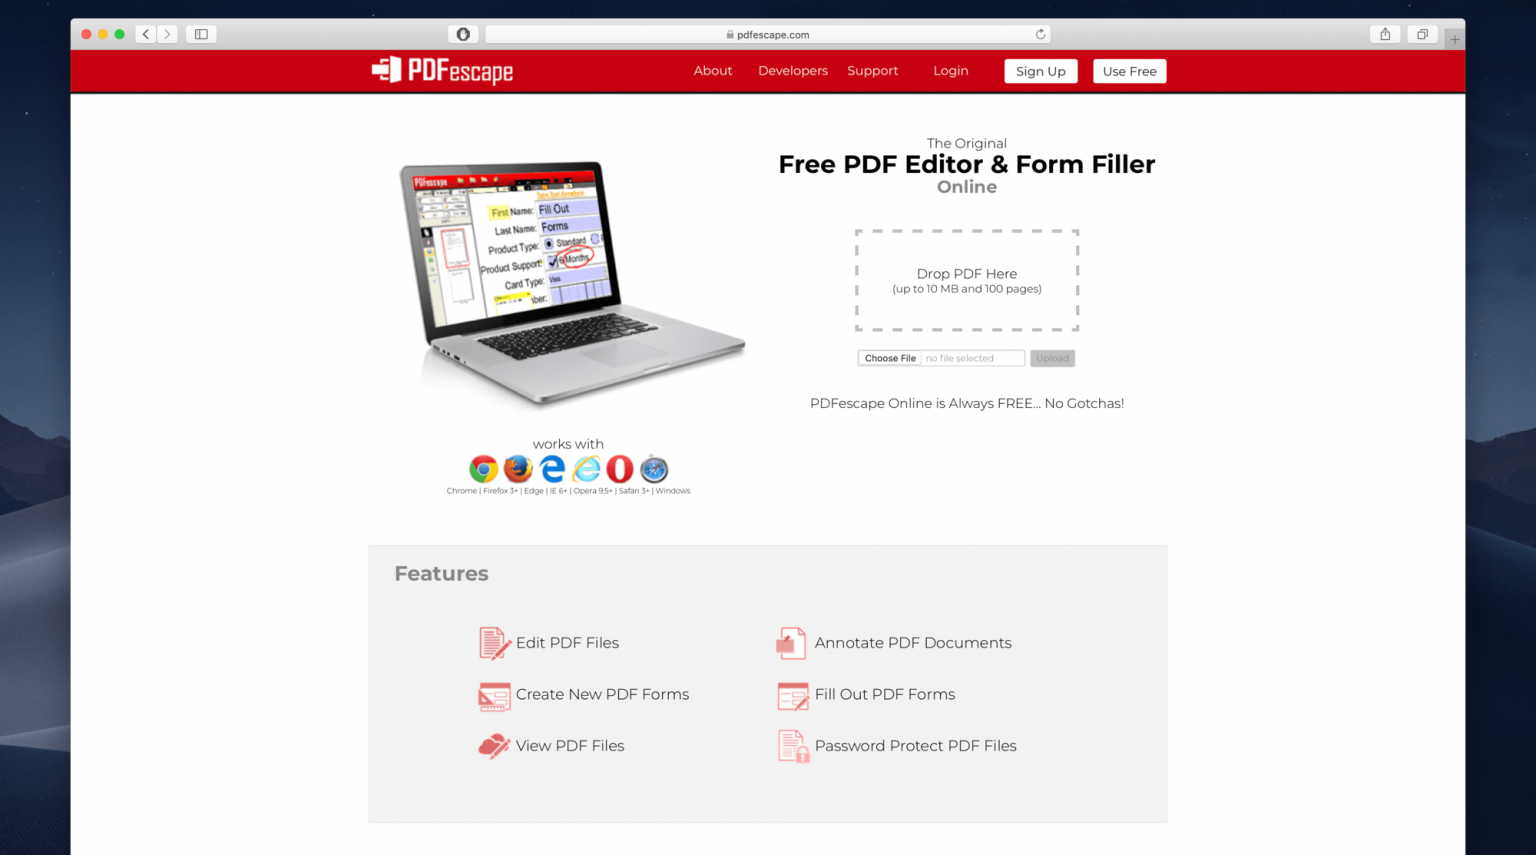 sejda pdf desktop temp folder windows 10